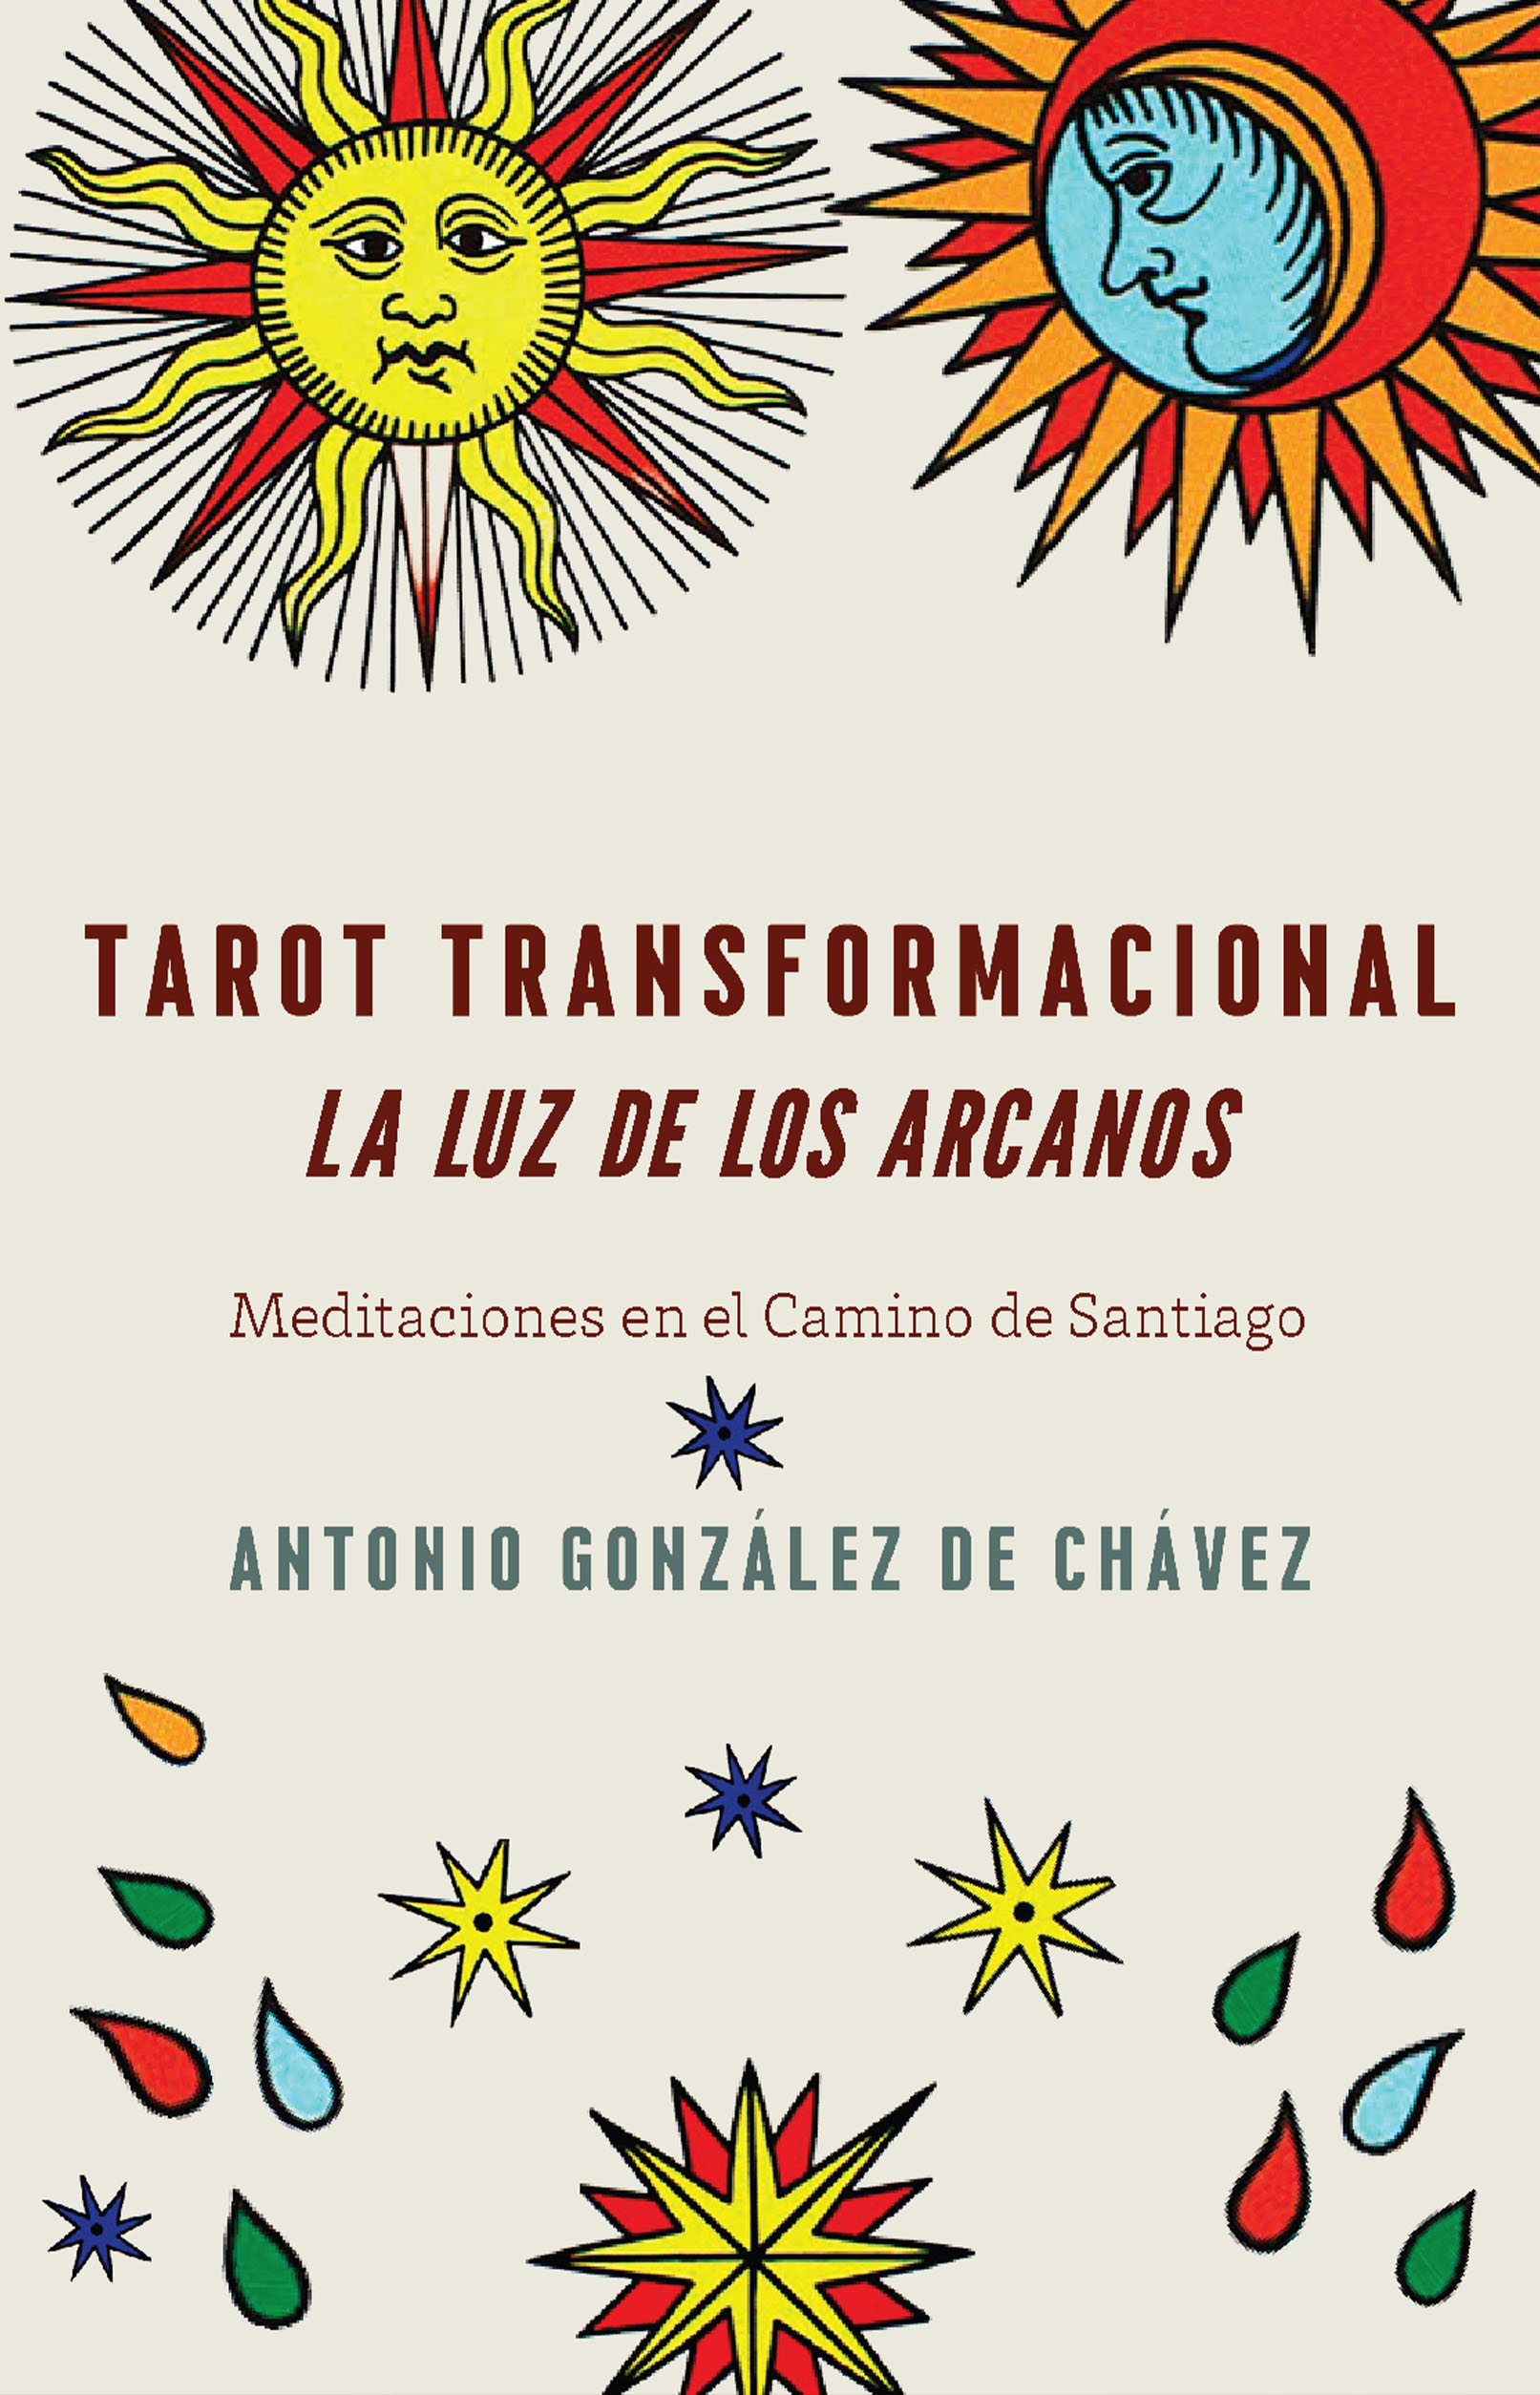 Tarot transformacional, de Antonio González de Chávez